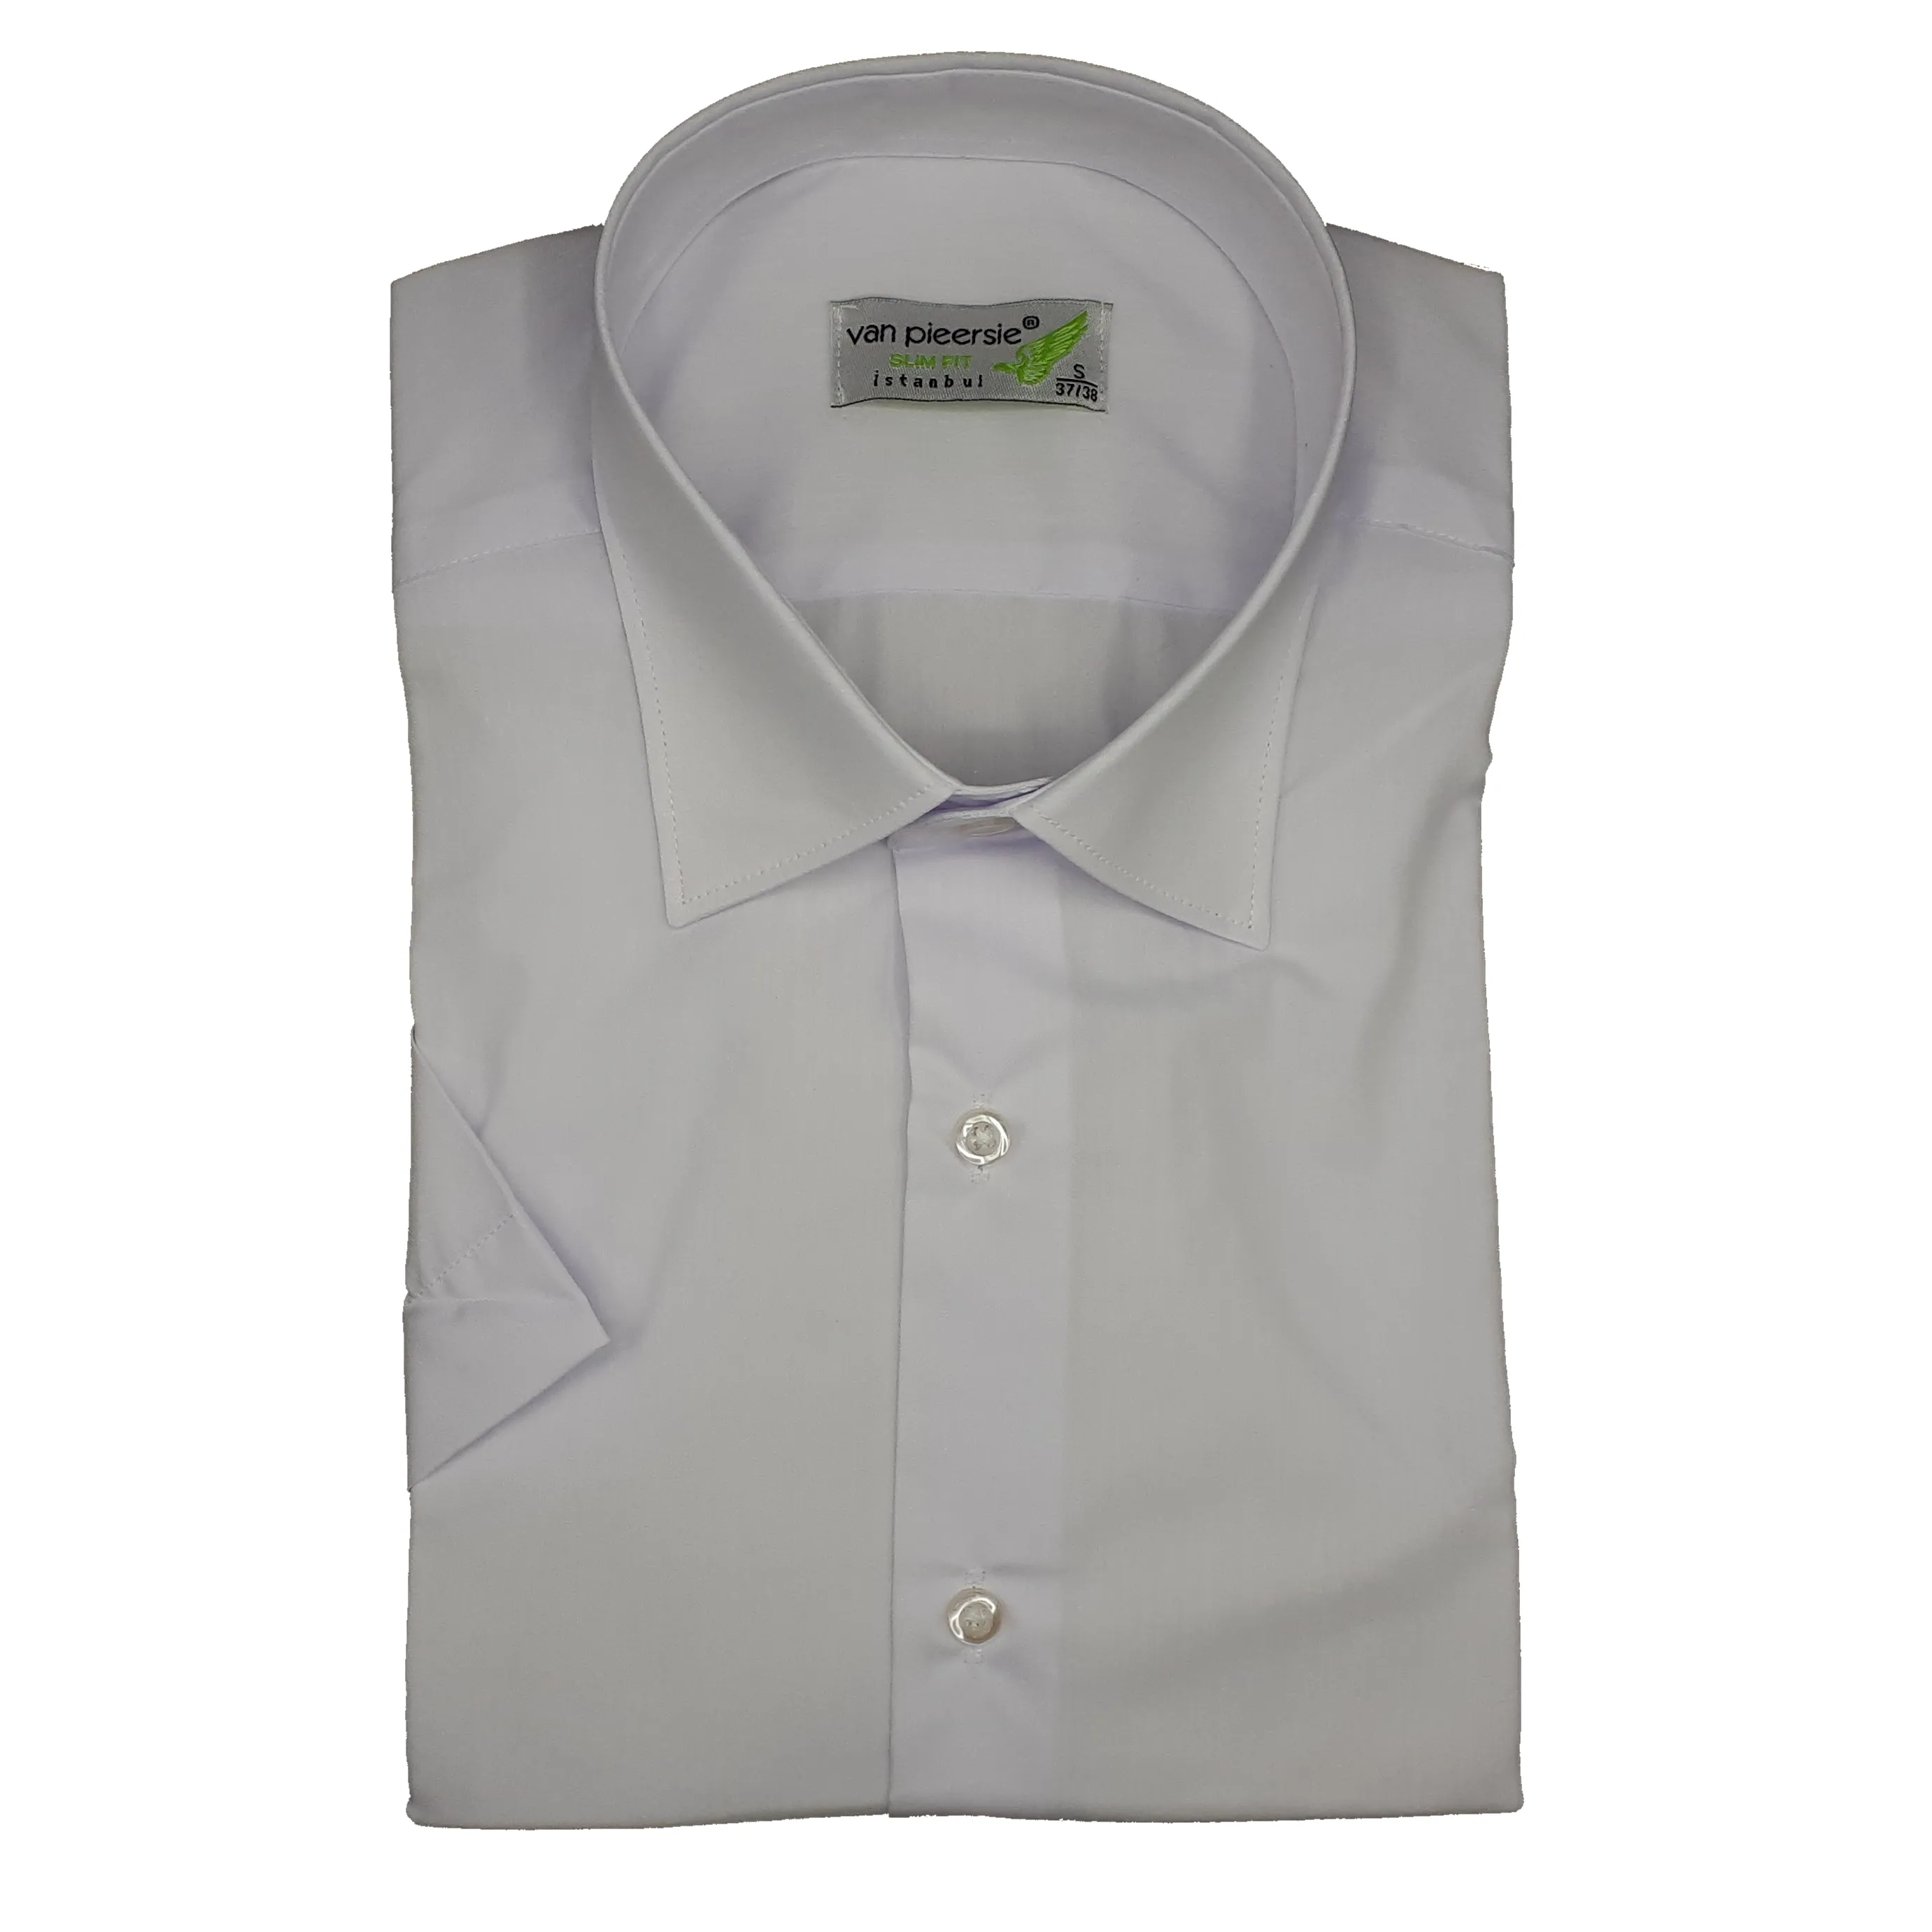 Cheap Wholesale Best Price Business Men's Dress Shirt Made in Turkey short sleeve